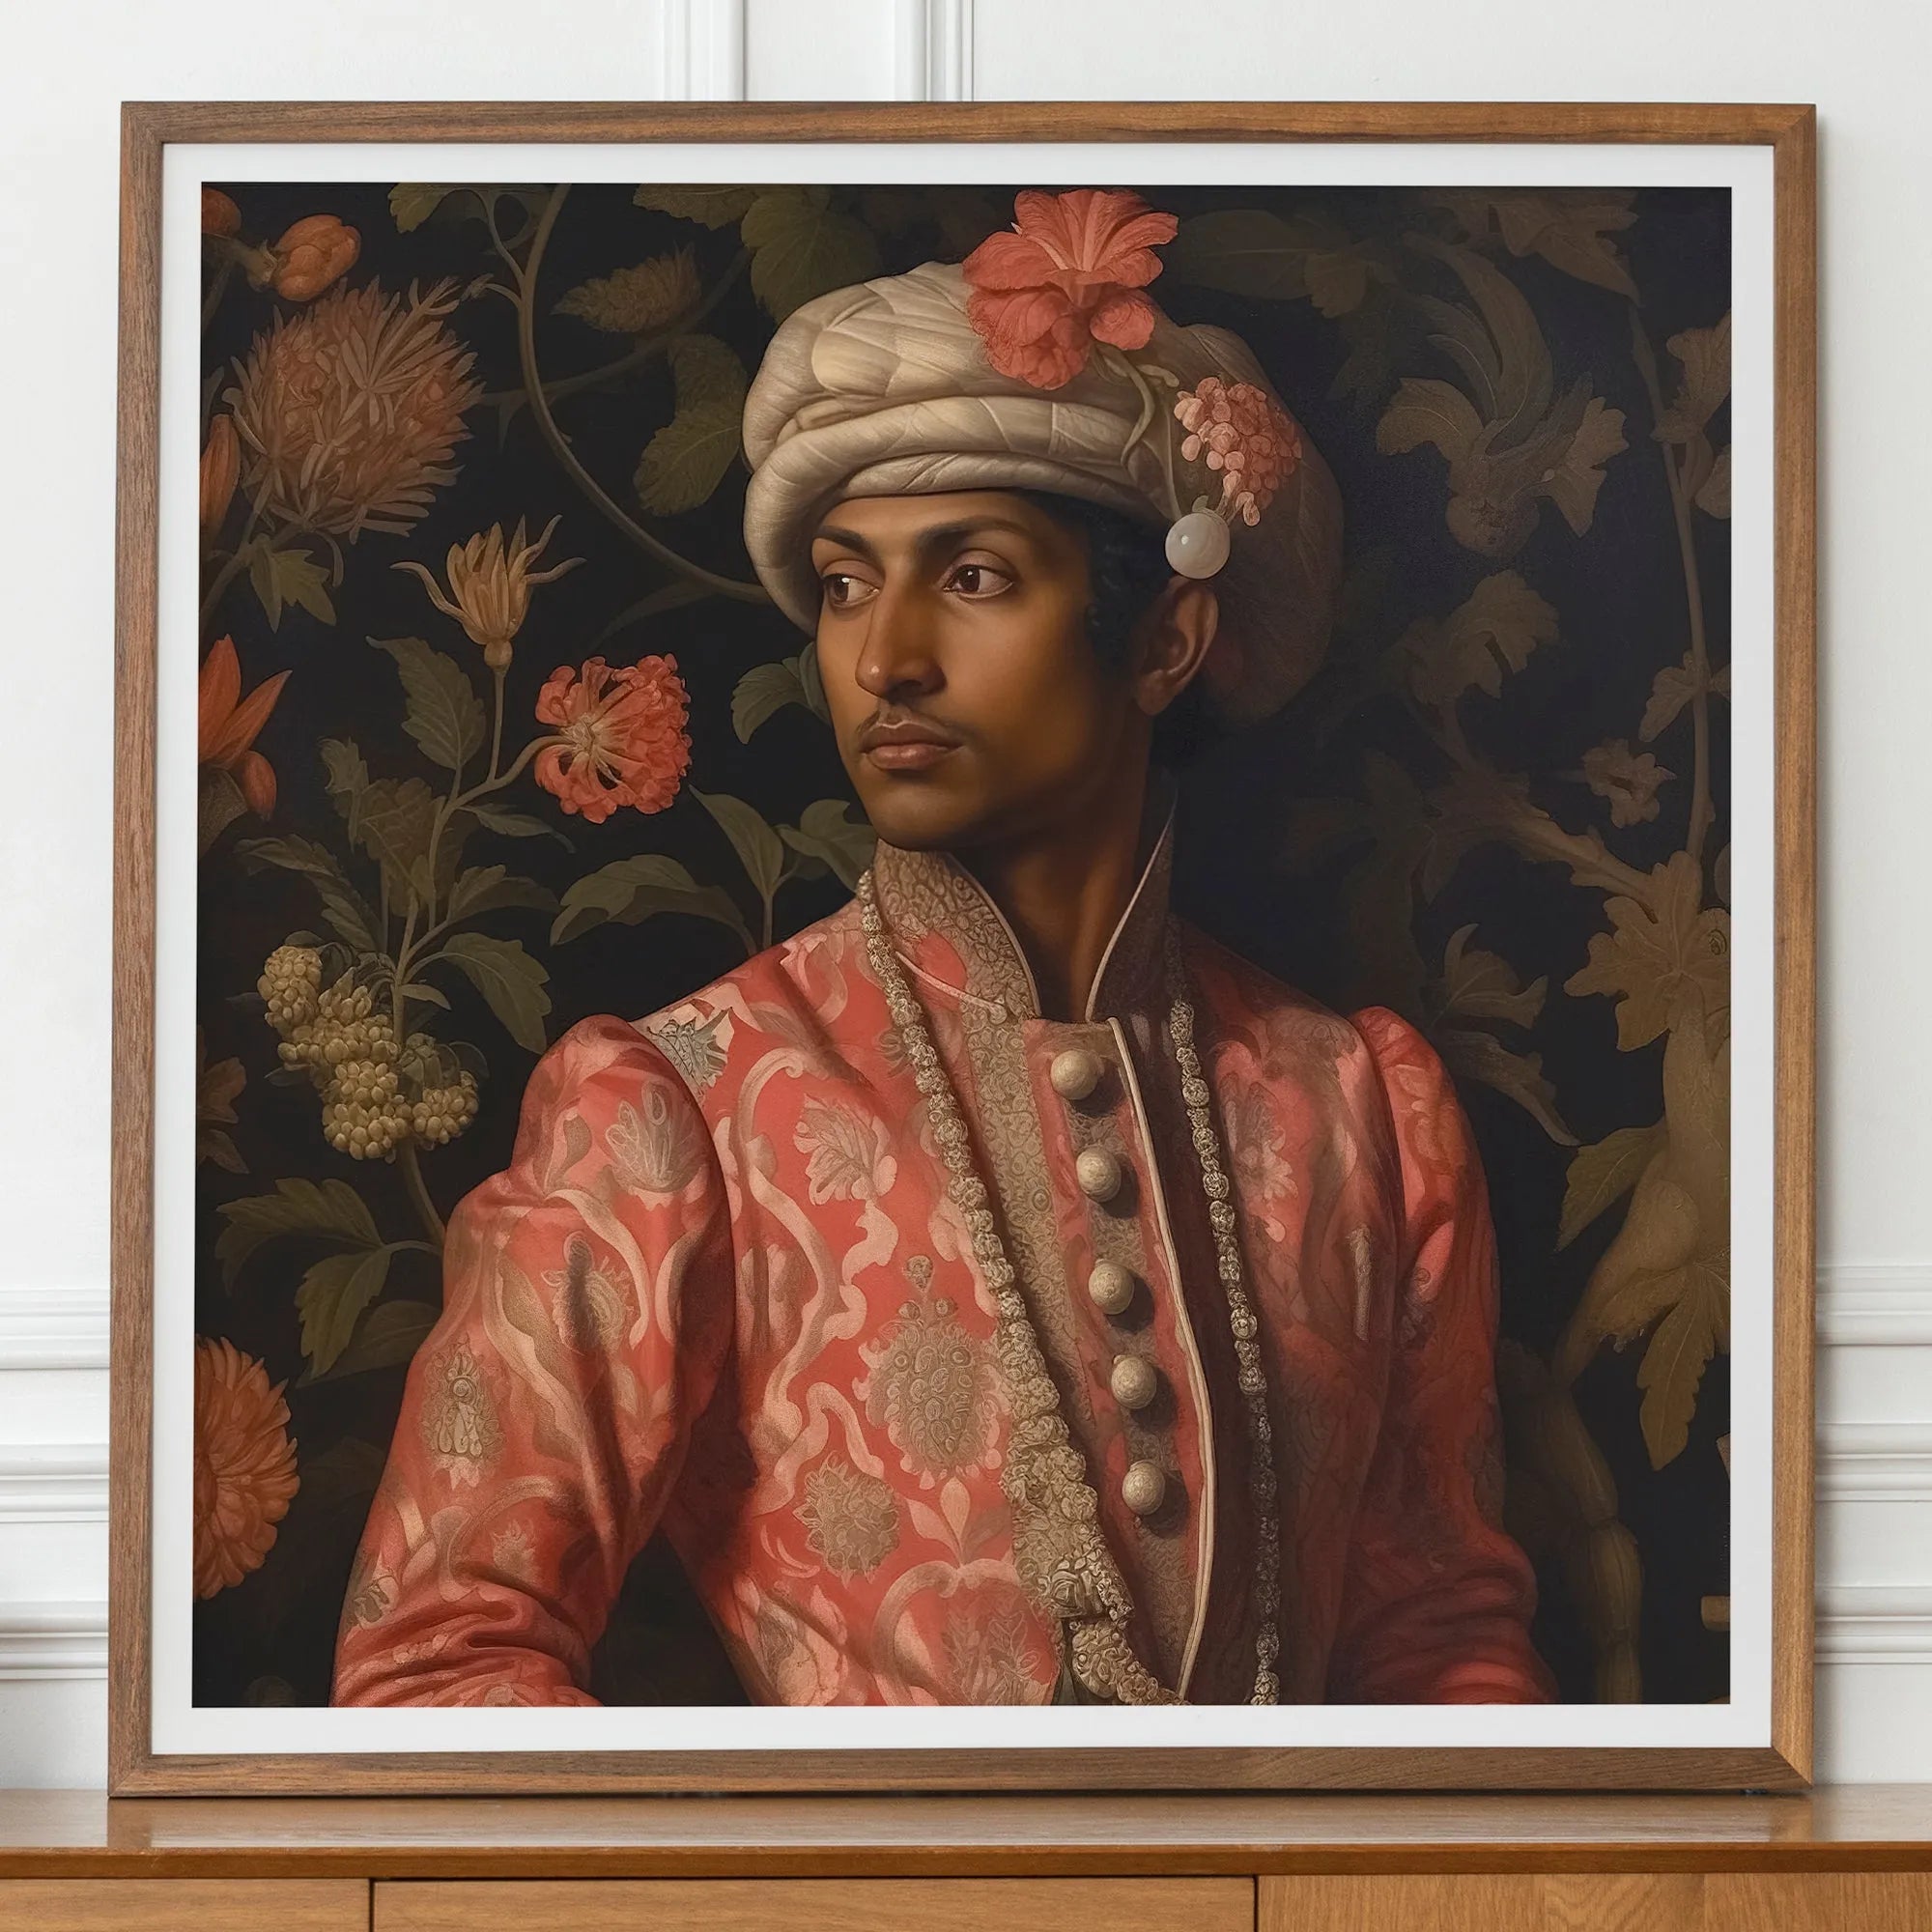 Prince Kaniyan - Gay India Tamil Royalty Queerart Print - 30’x30’ - Posters Prints & Visual Artwork - Aesthetic Art